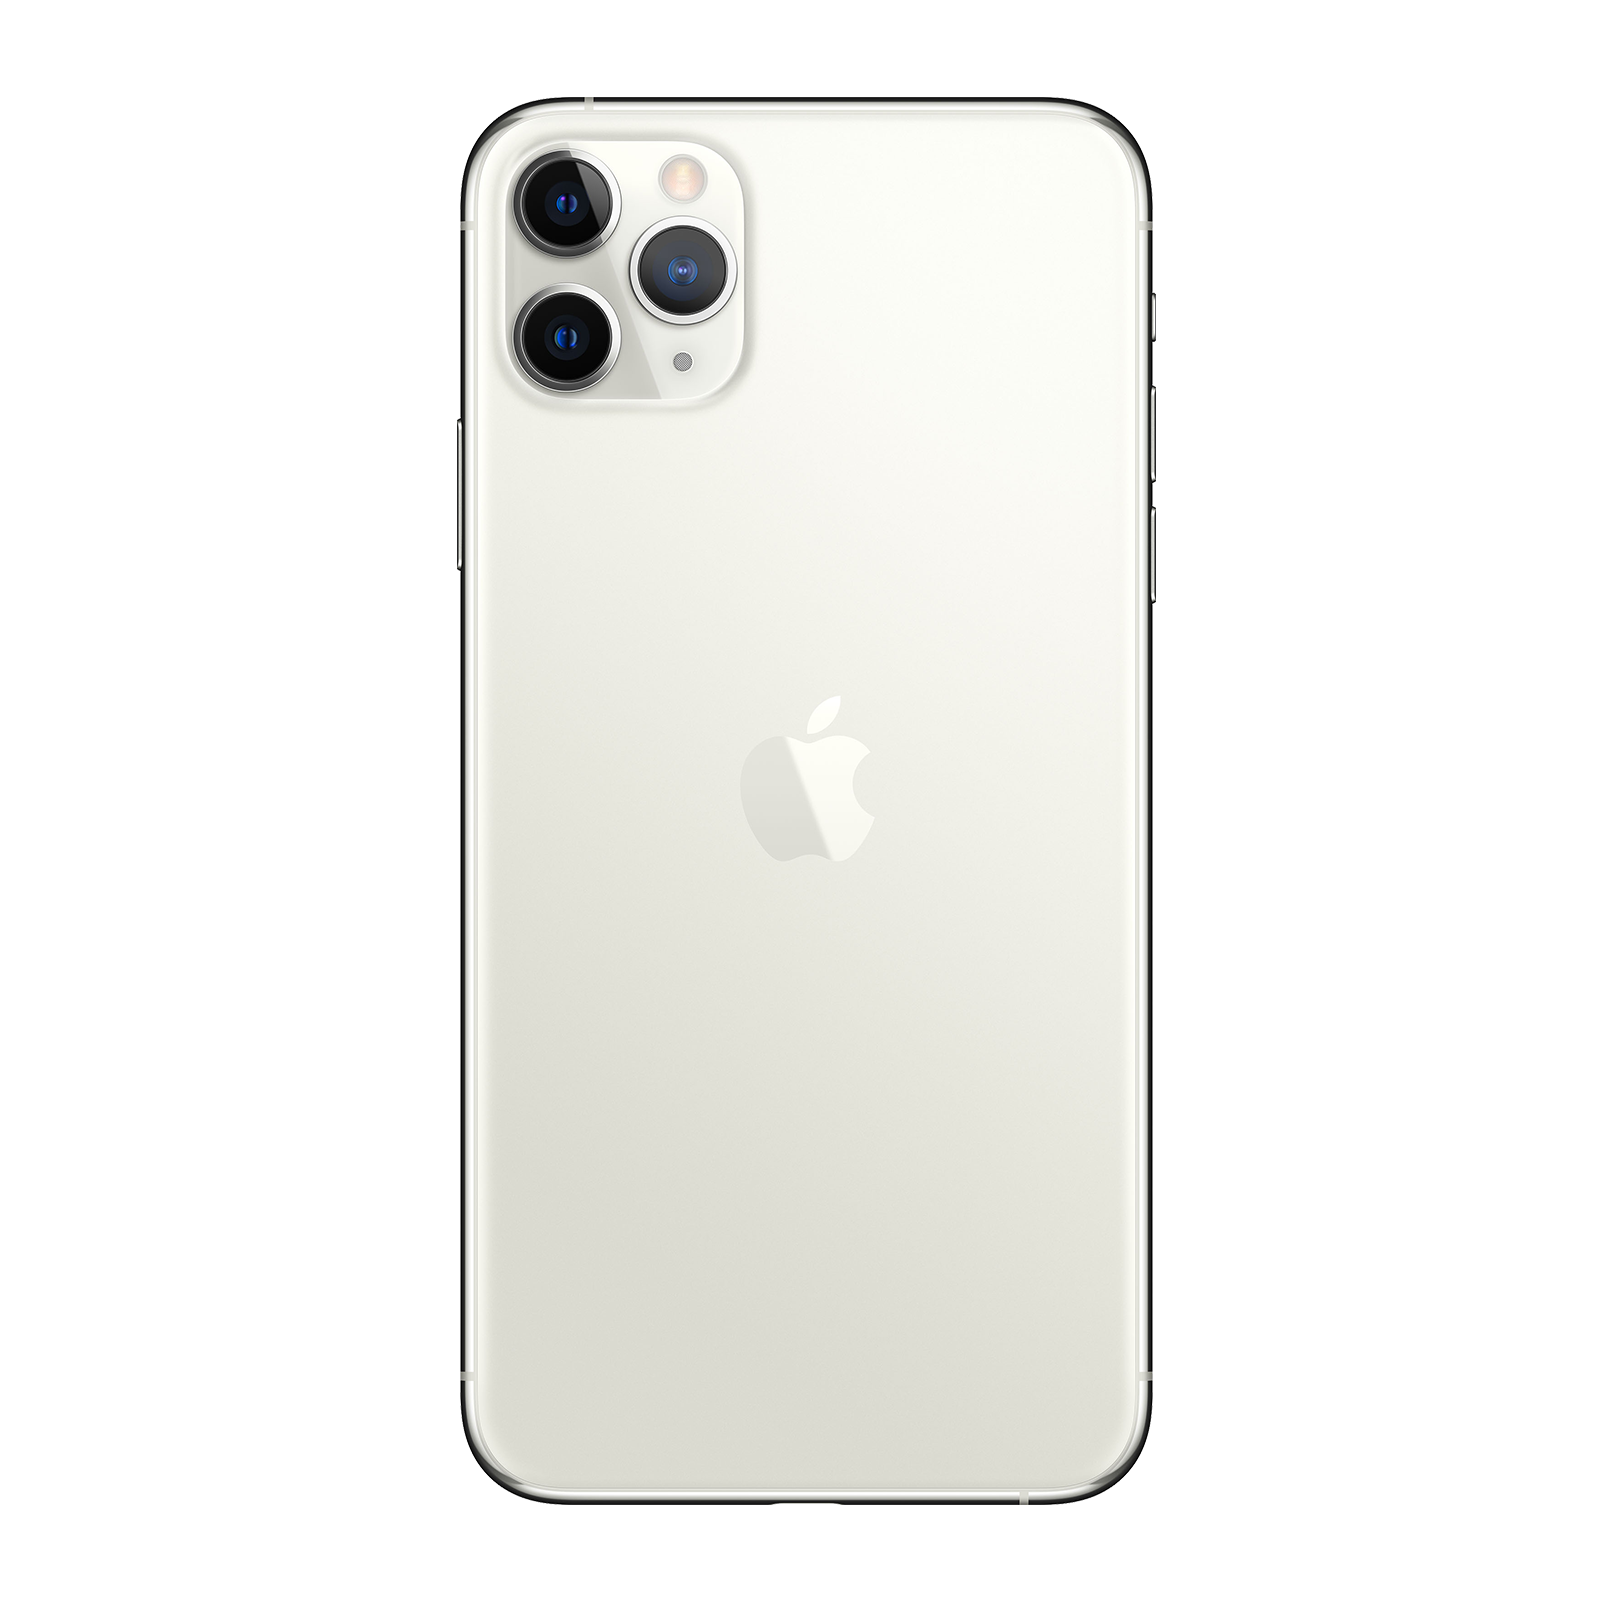 Apple iPhone 11 Pro Max 512GB Silver Very Good - Unlocked